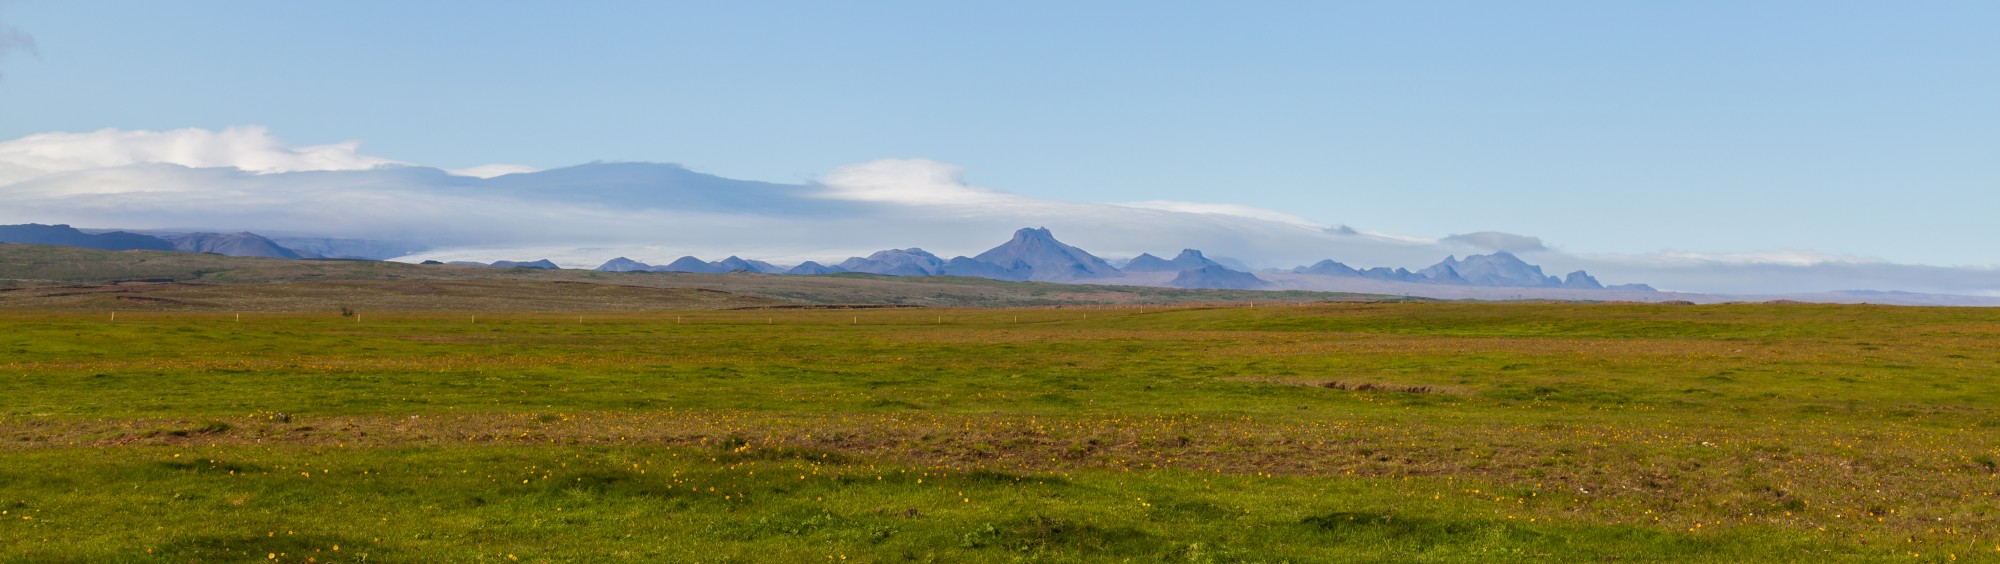 Tindfjallajökull, Suðurland, Islandia, 2014-08-16, DD 131